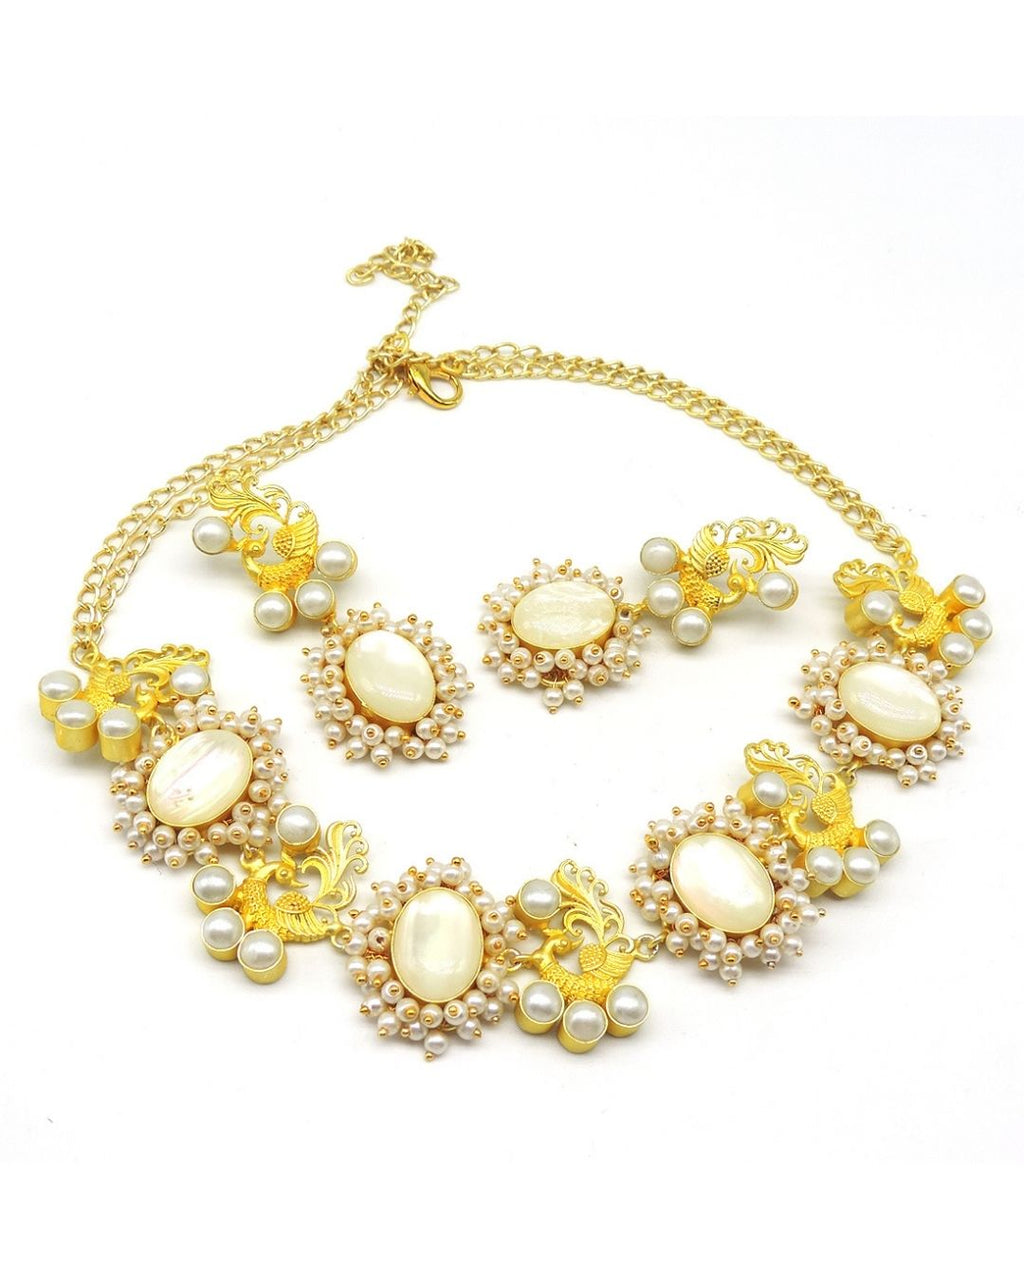 Amiyah Choker - Necklaces - Handcrafted Jewellery - Made in India - Dubai Jewellery, Fashion & Lifestyle - Dori